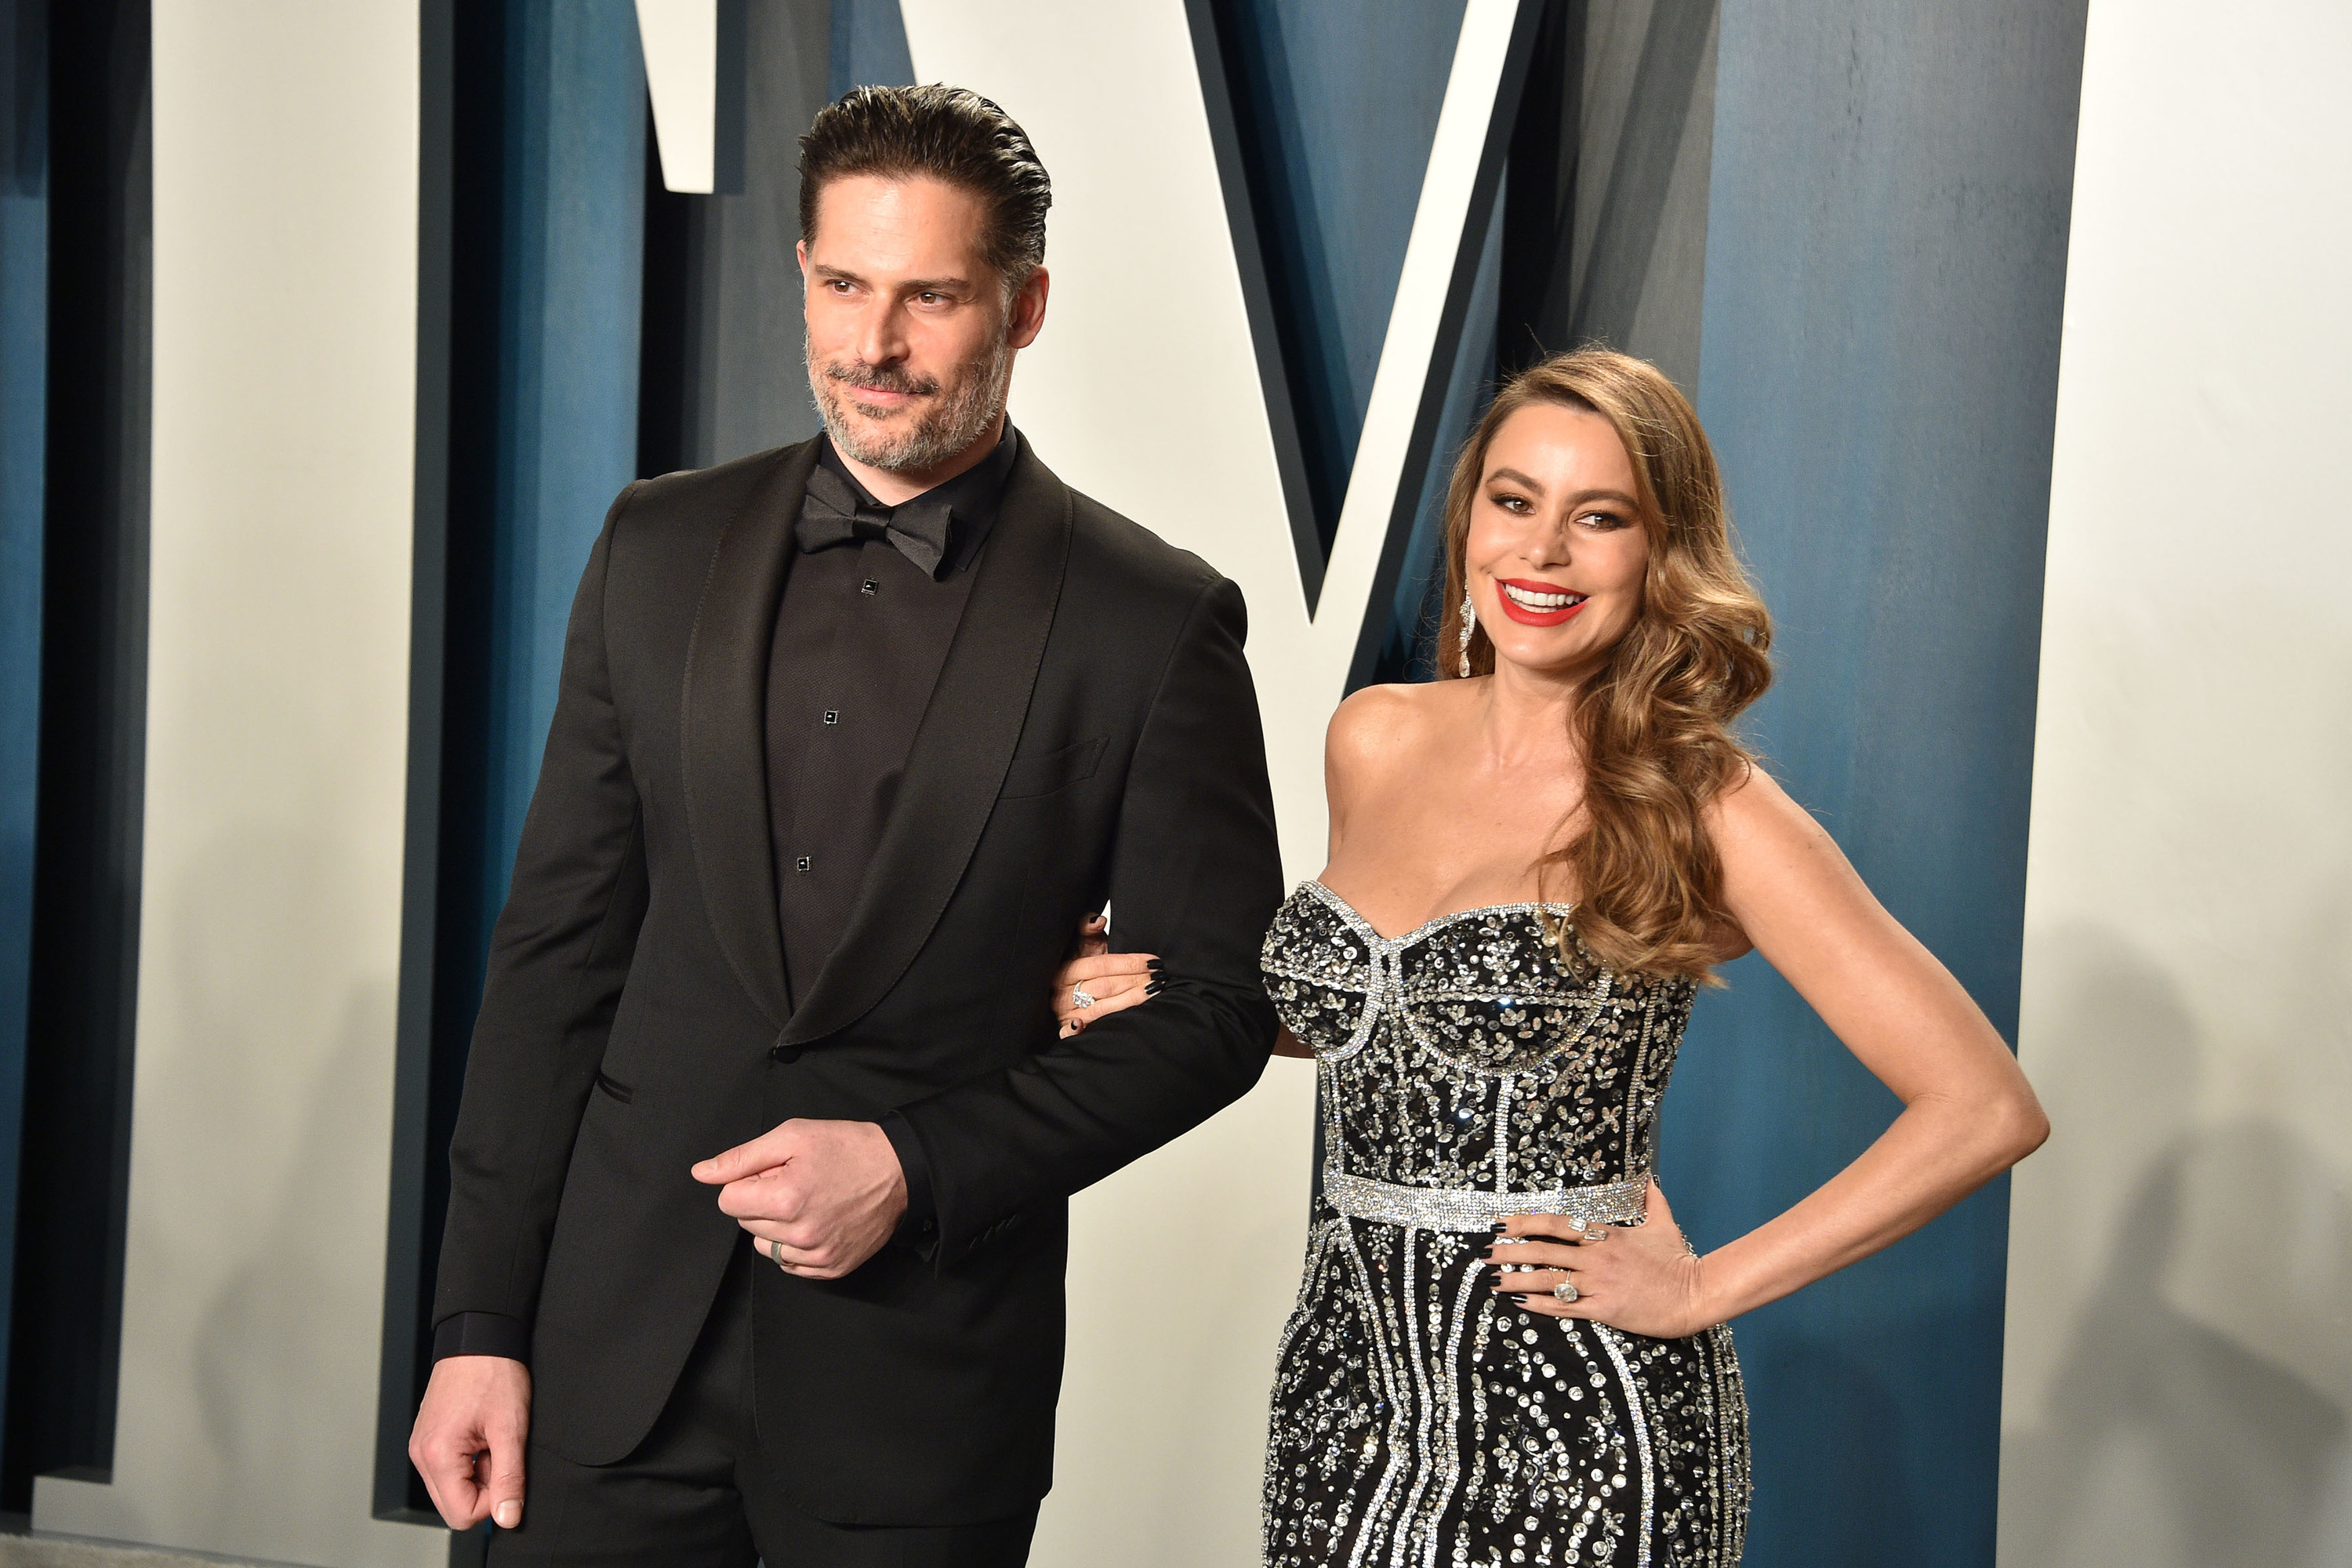 Joe Manganiello and Sofía Vergara at the 2020 Vanity Fair Oscar Party on February 09, 2020